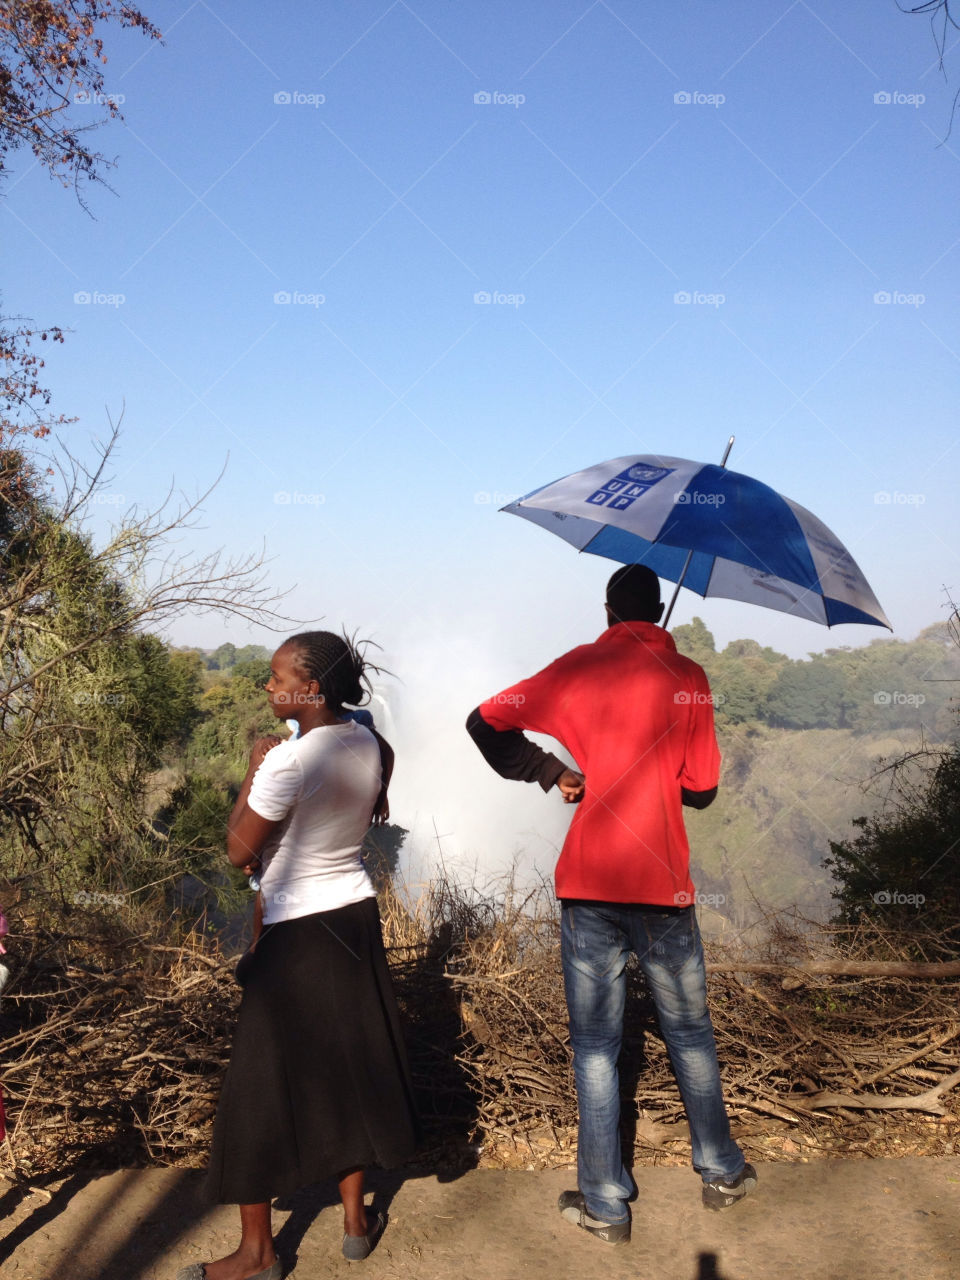 umbrella africa zimbabwe sudan by francescfabre